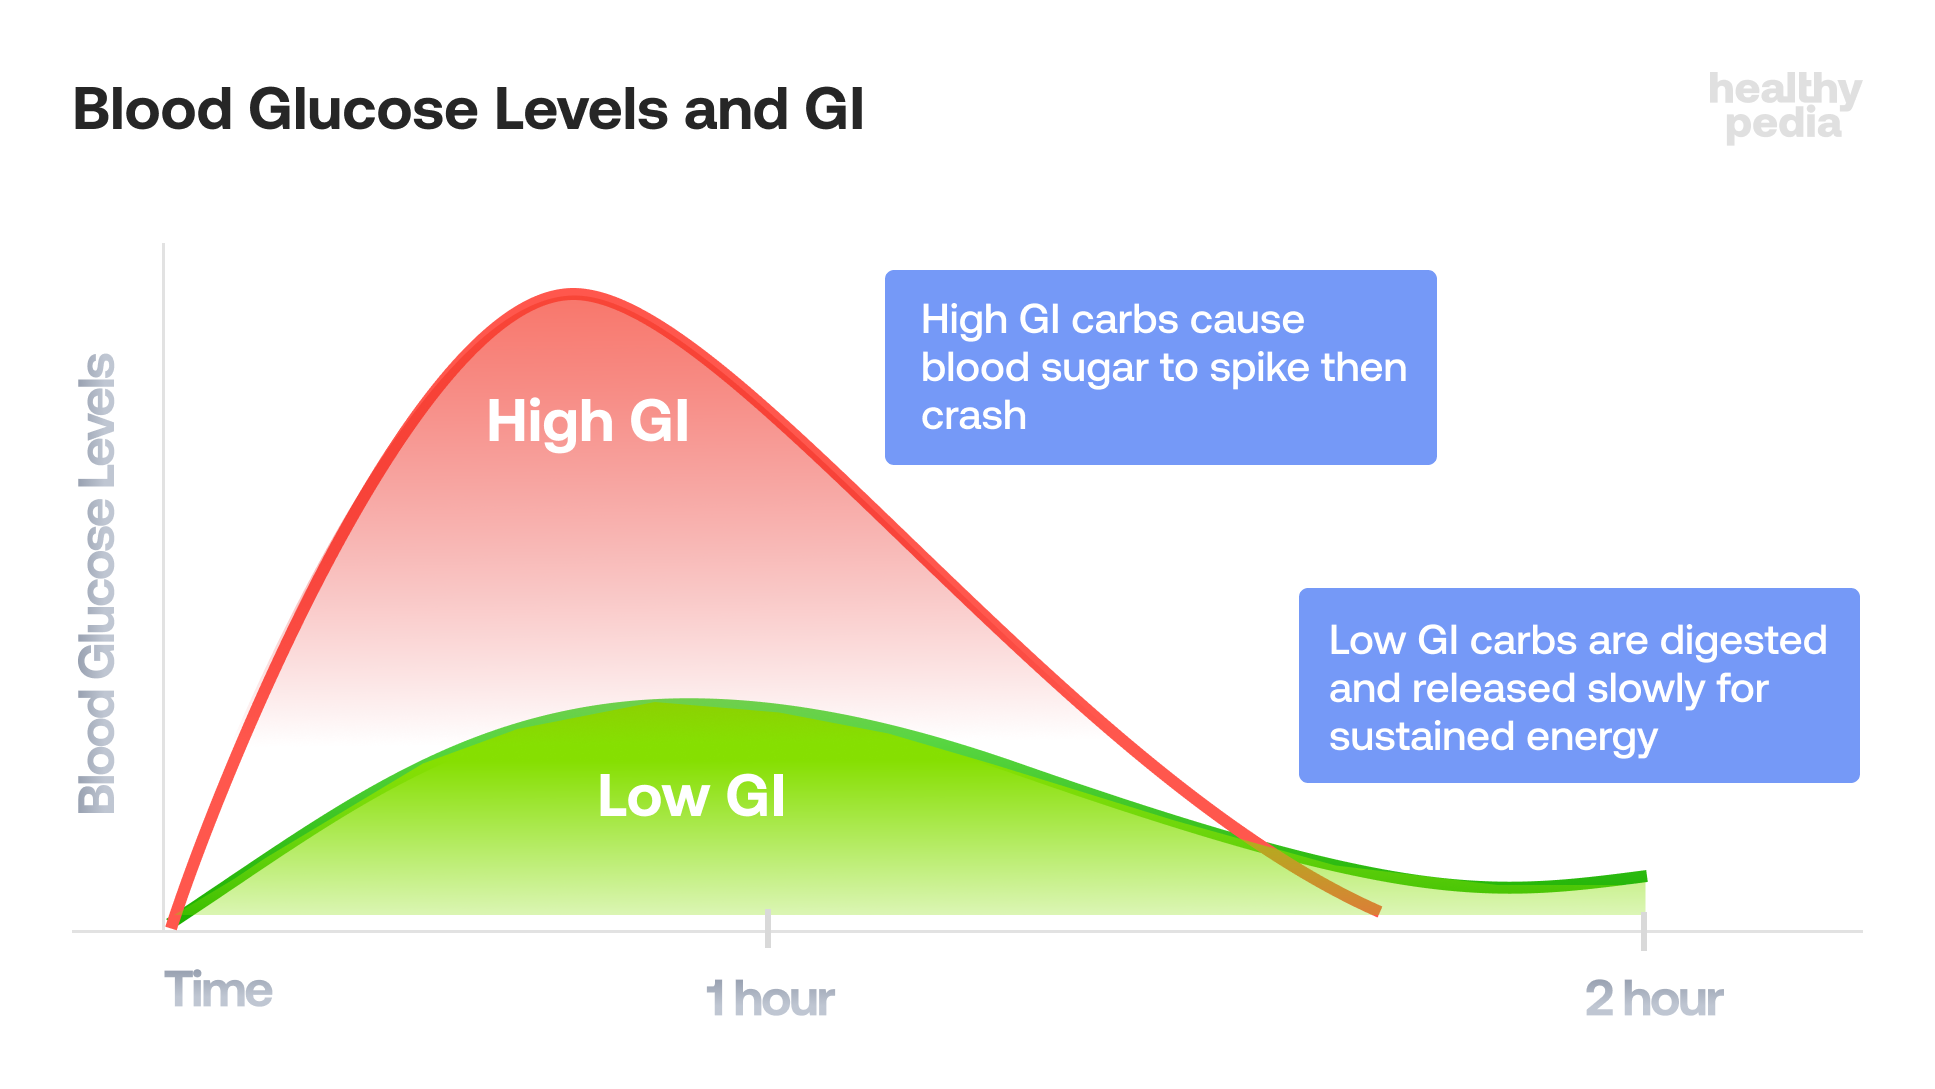 Blood Glucose Levels and GI